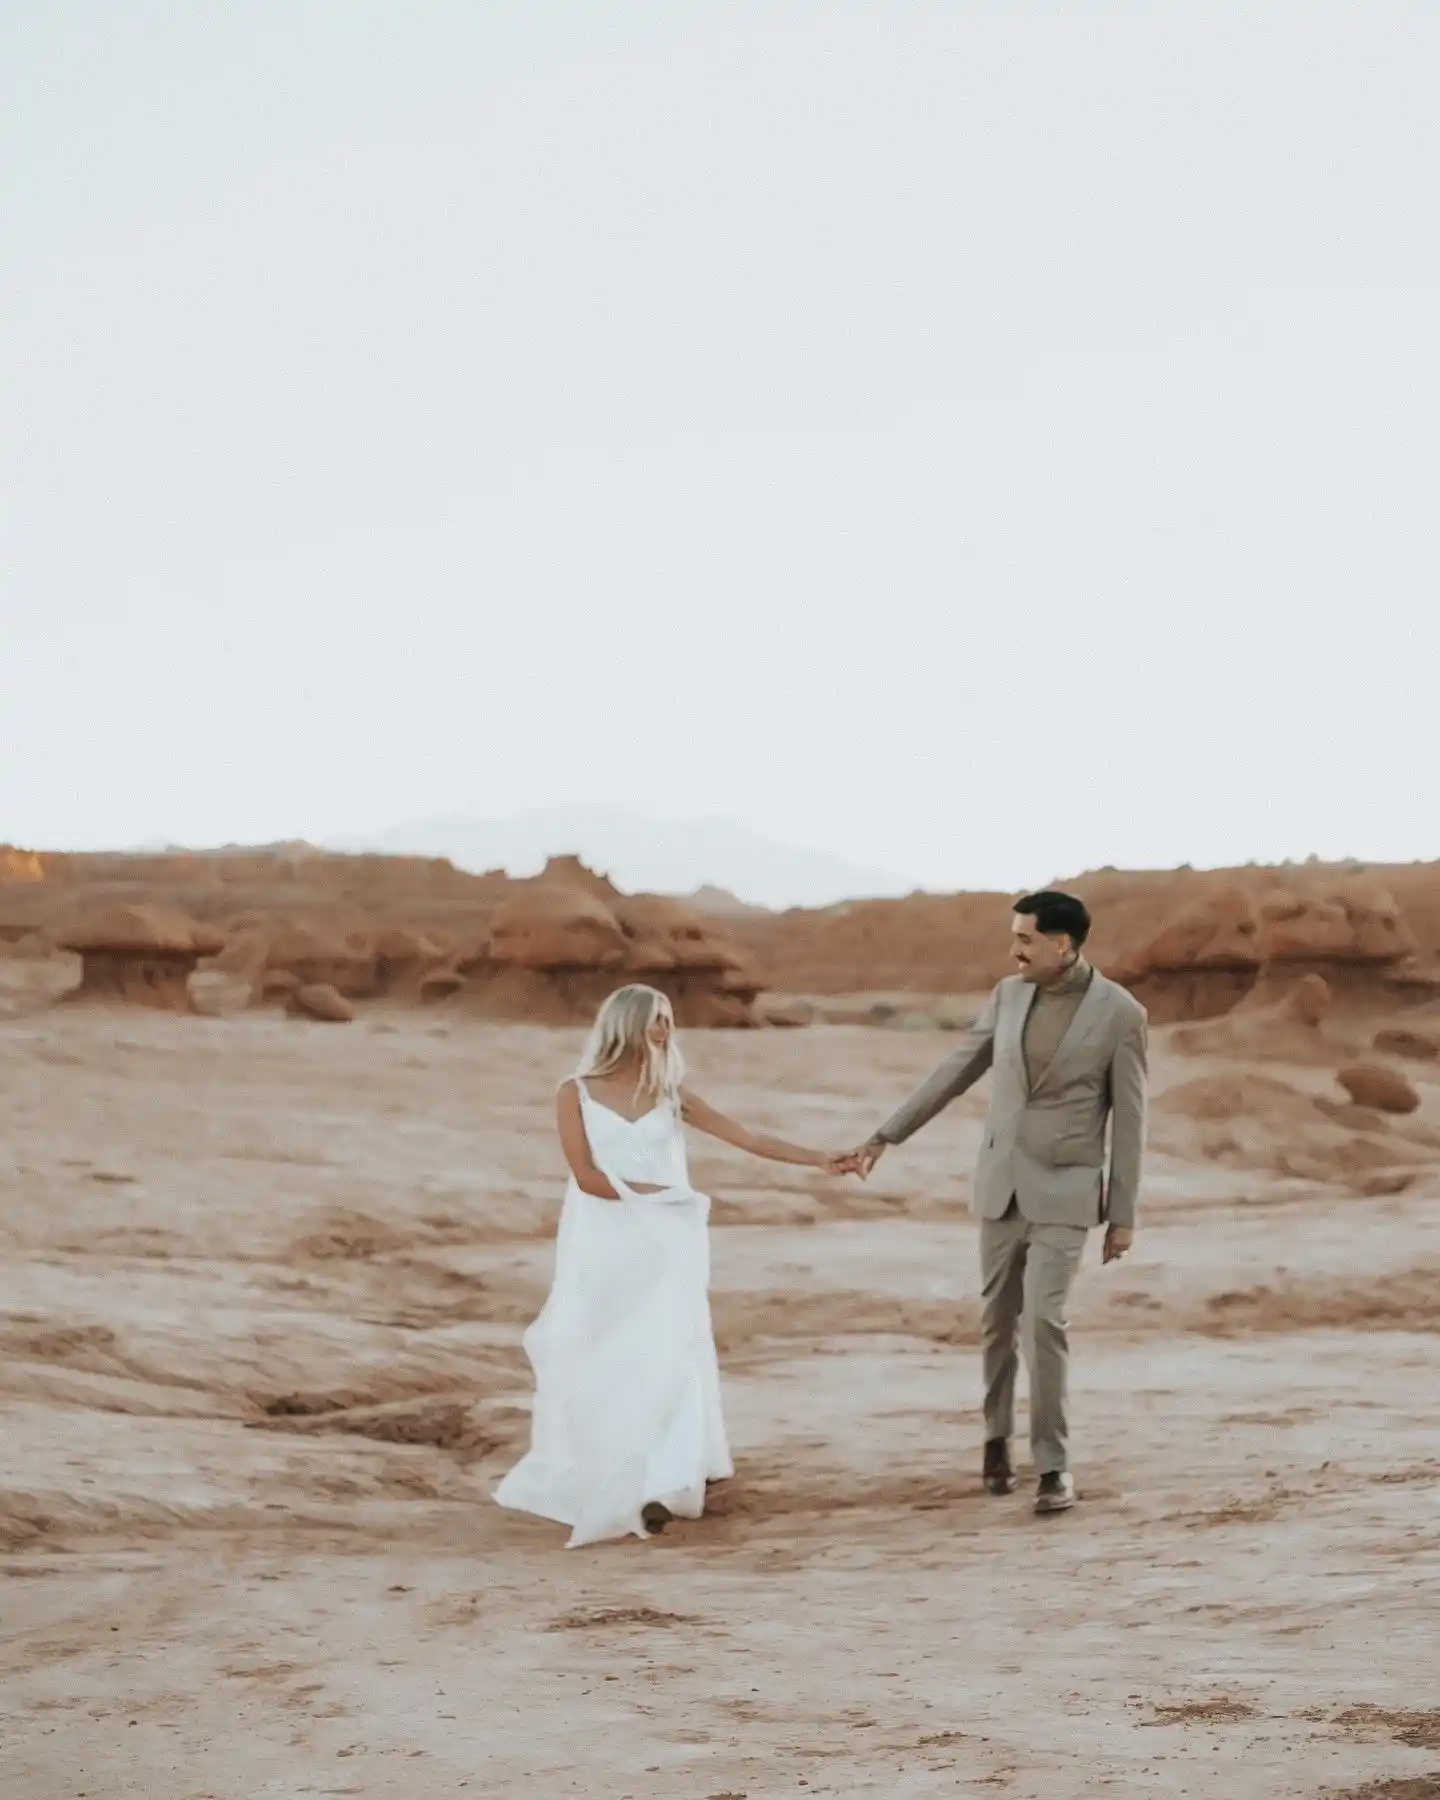 Bride and groom walking in the desert holding hands far apart